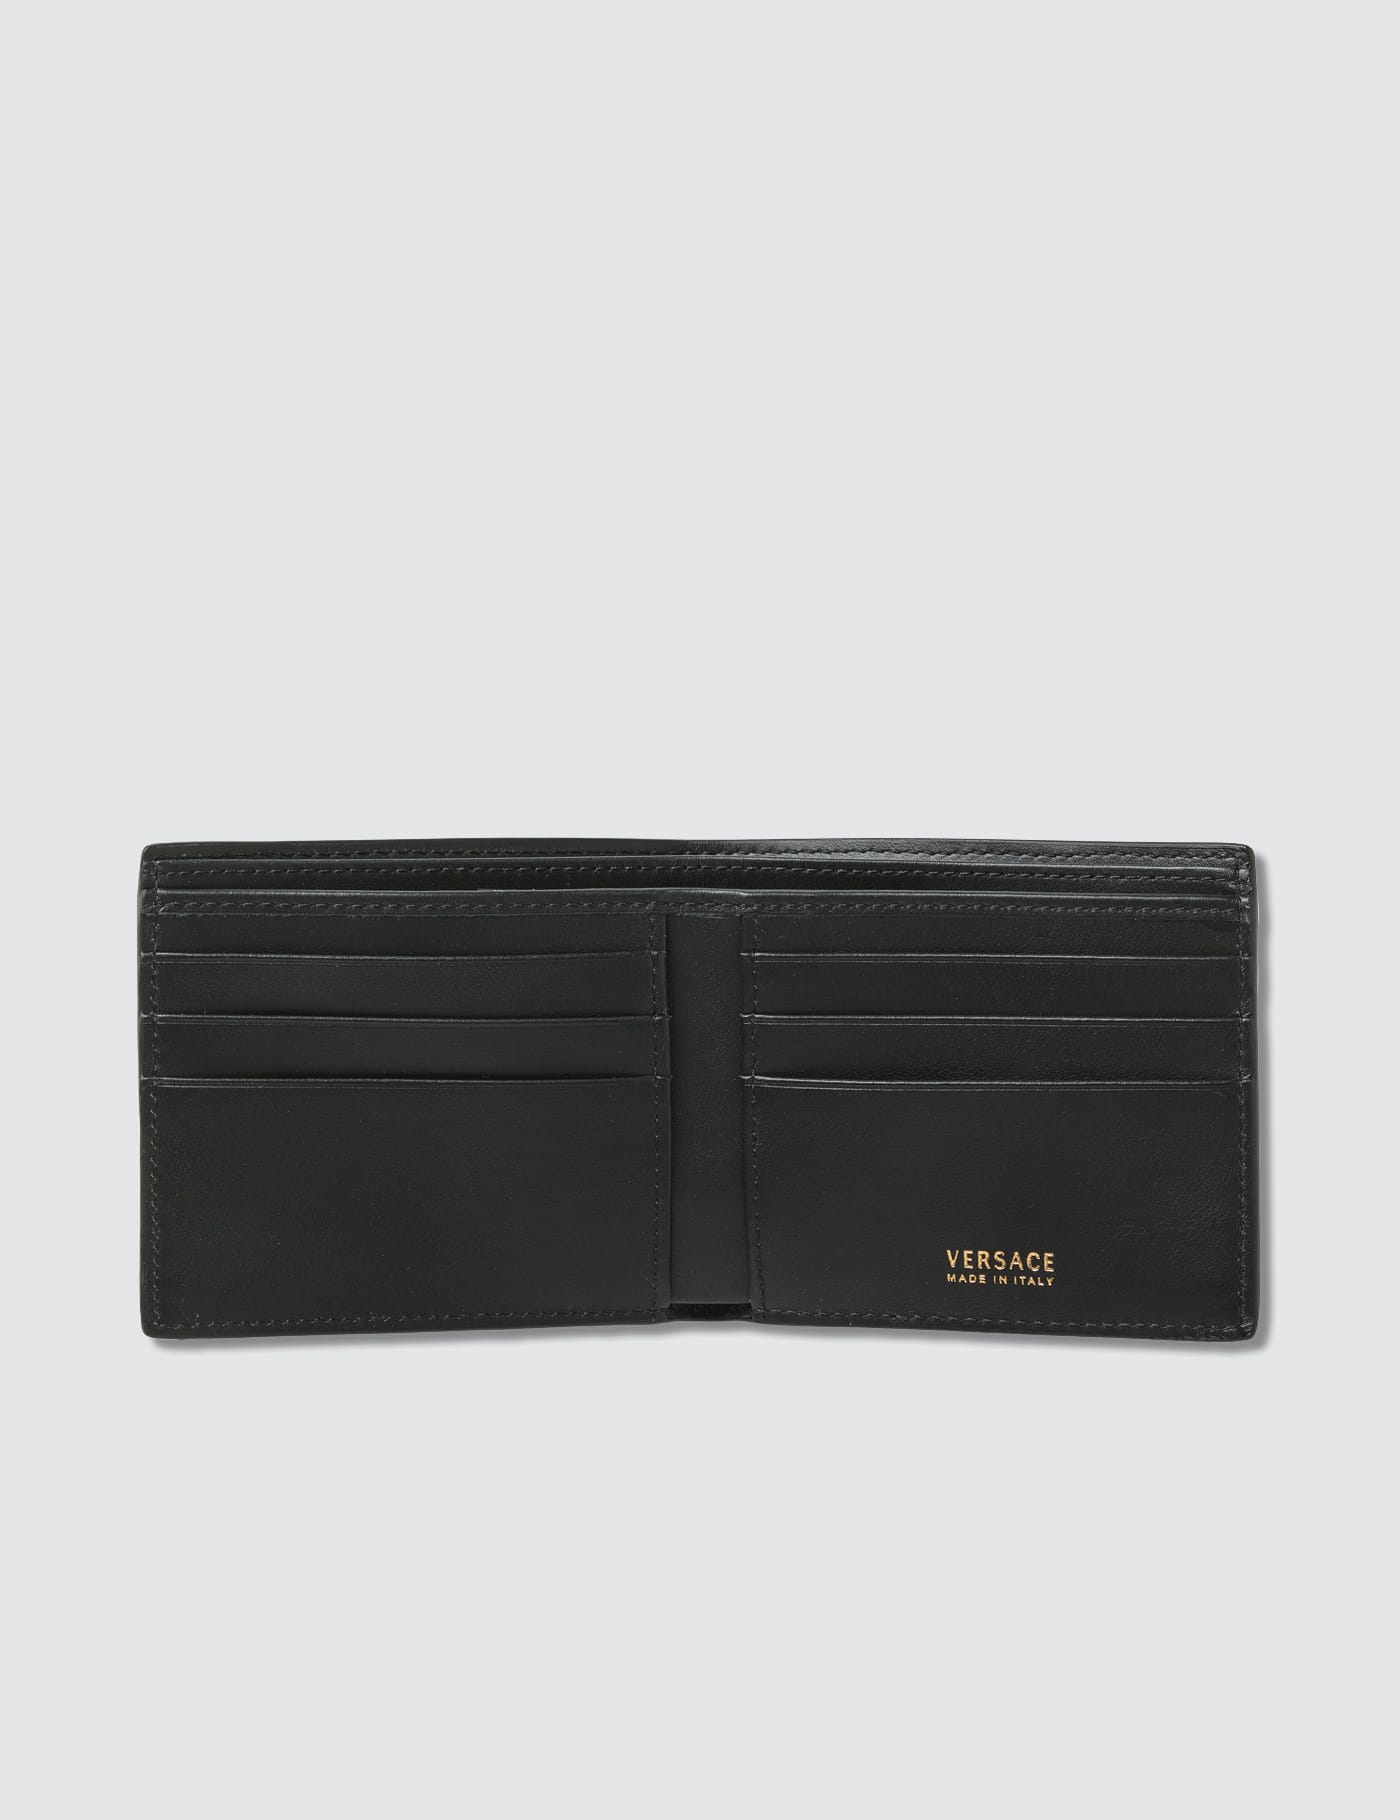 Versace Vintage Calf Leather Wallet - Black Wallets, Accessories -  VES141423 | The RealReal